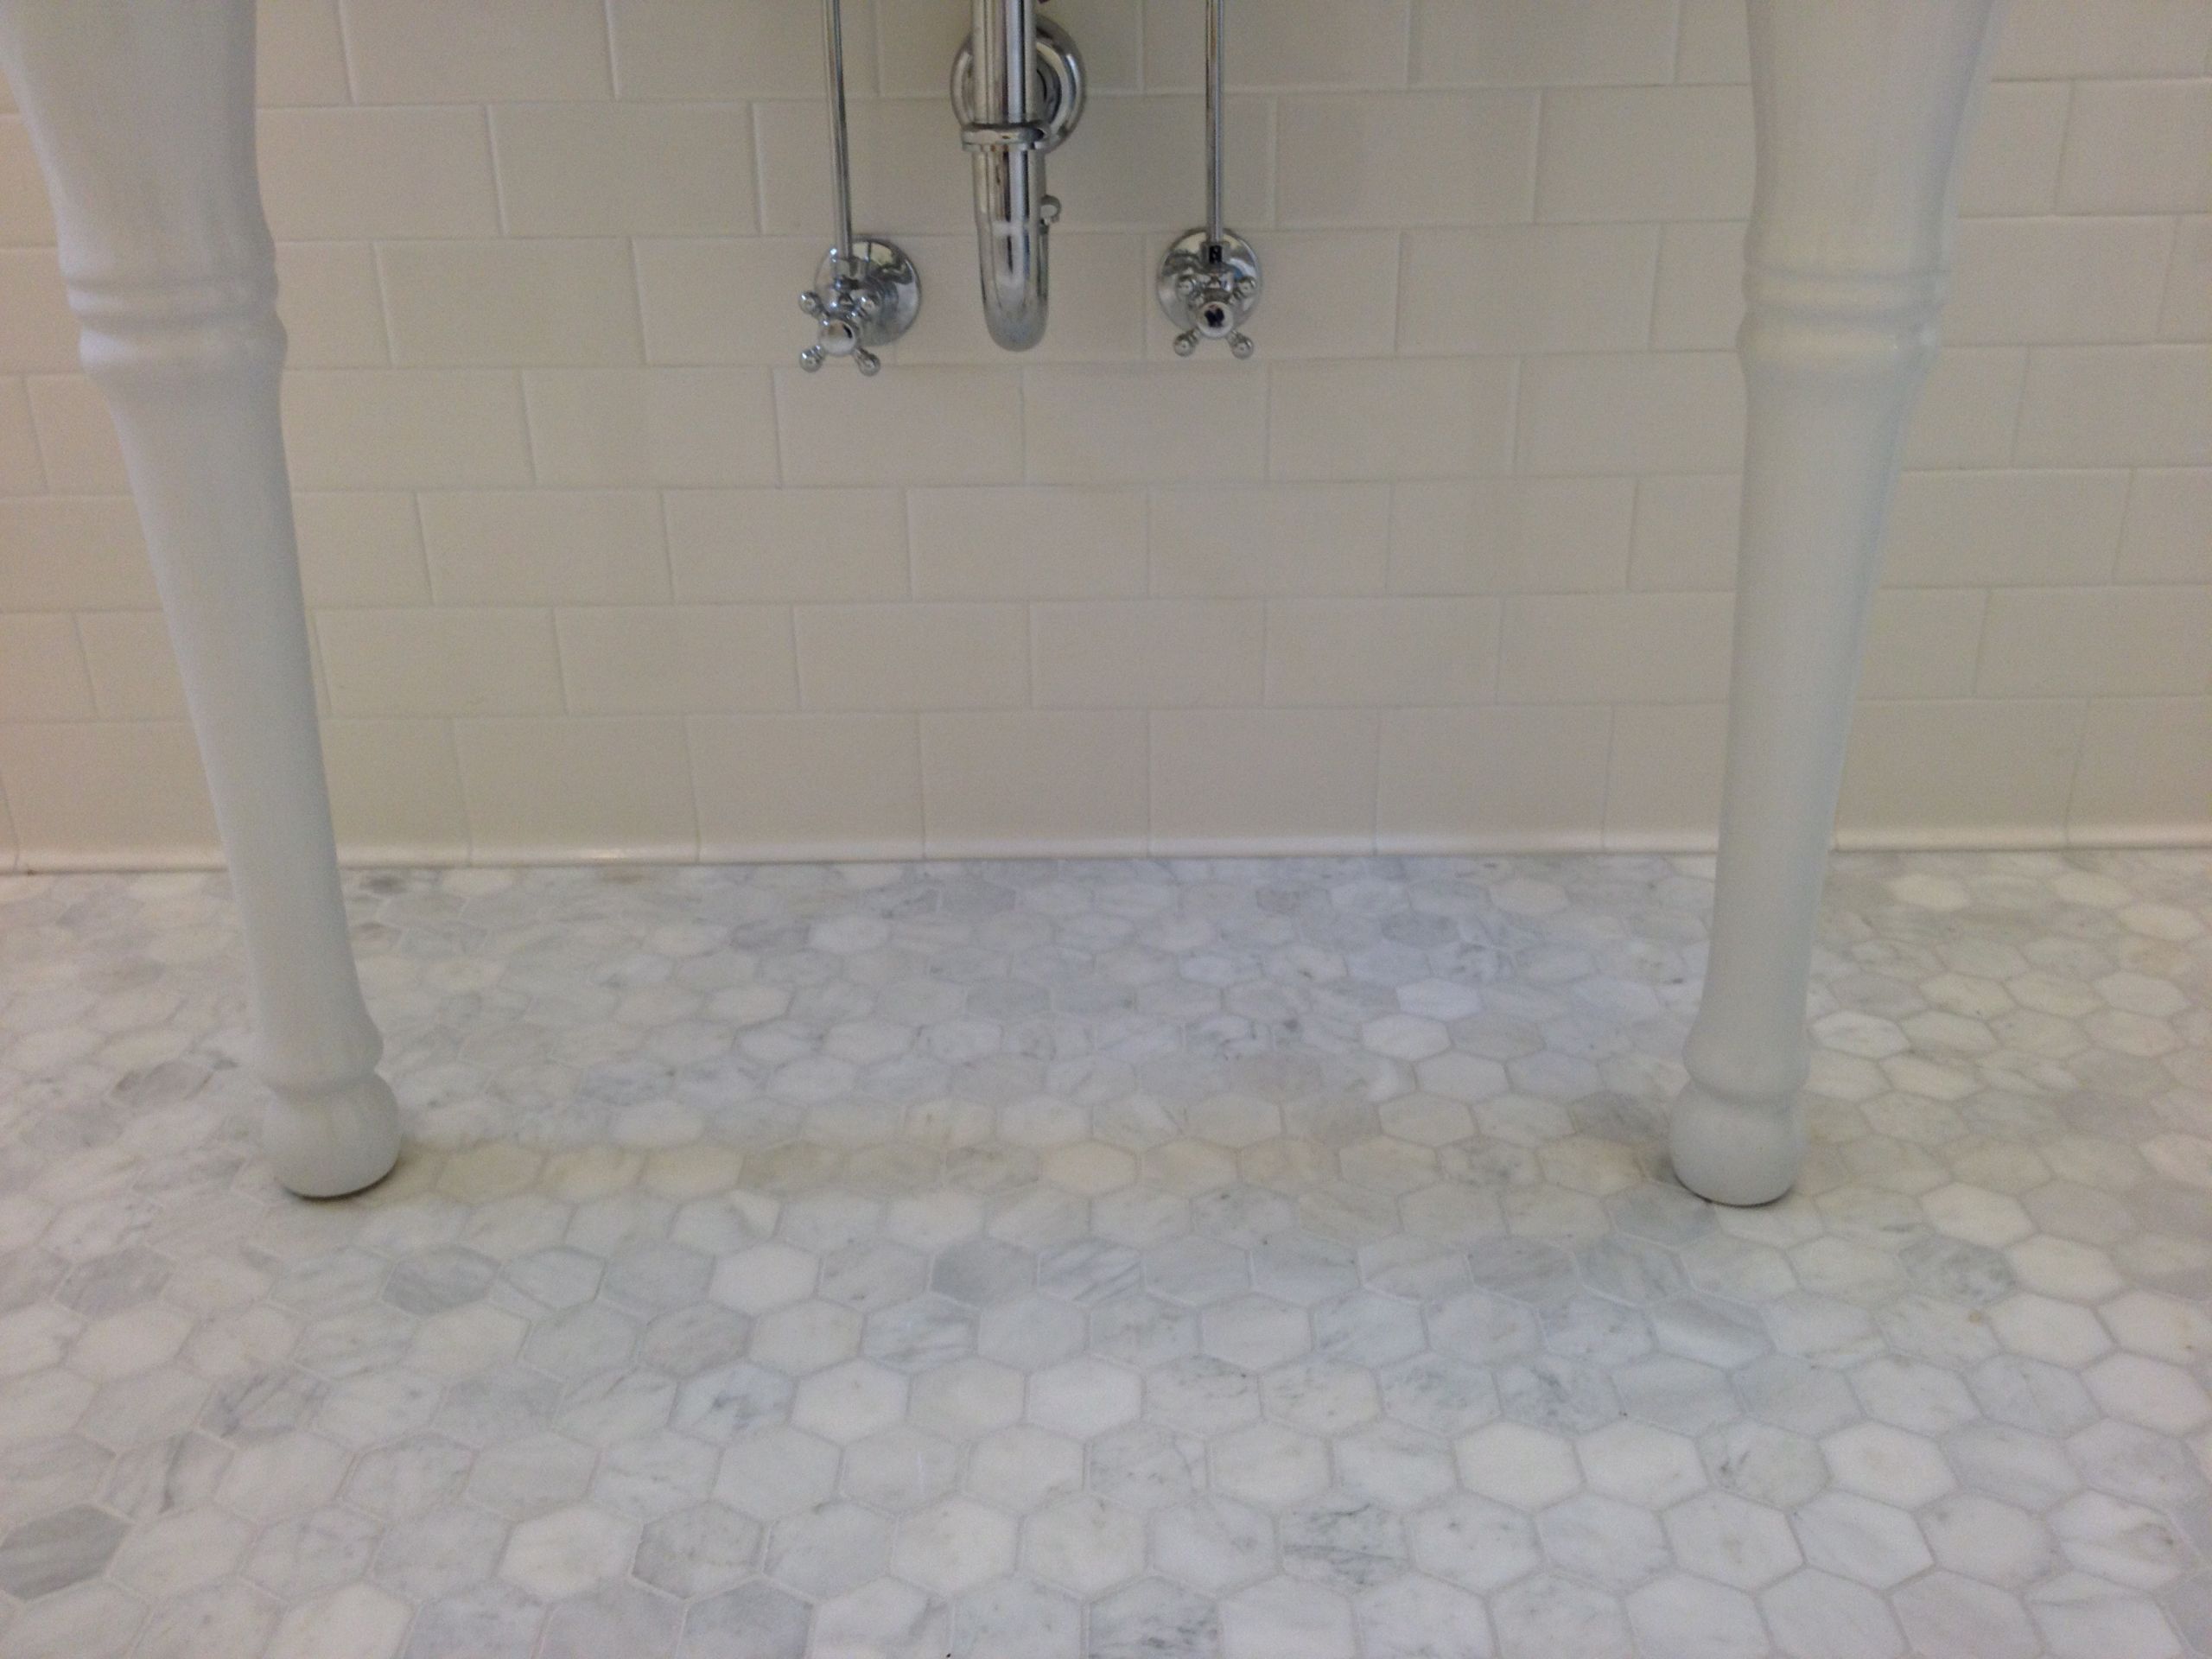 Hex Bathroom Floor Tile
 Small or larger hexagon tile in 1920 bathroom